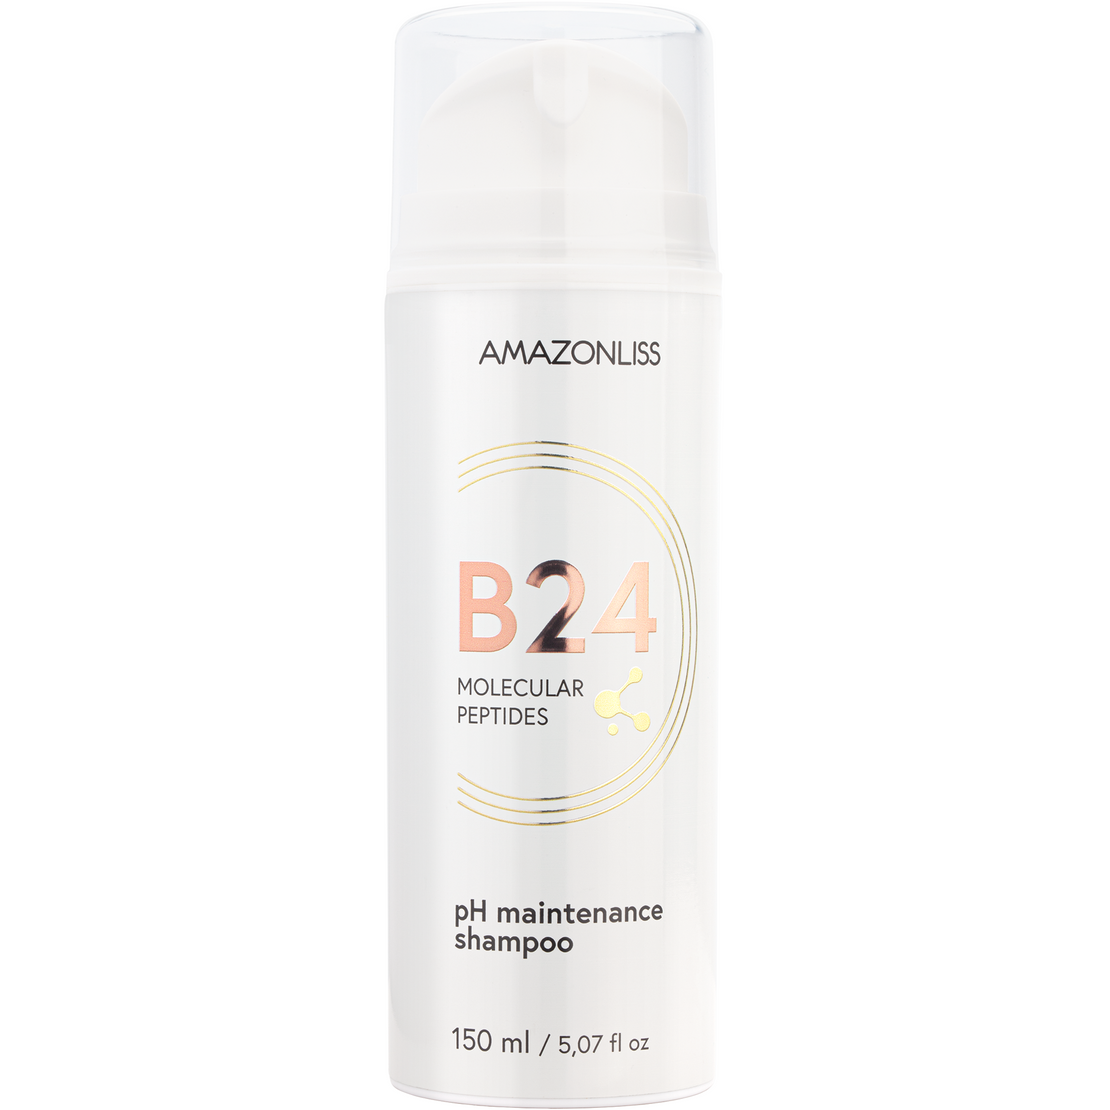 B24 Molecular Peptides – pH maintenace shampoo 5.07 Fl Oz - Nutree Cosmetics 